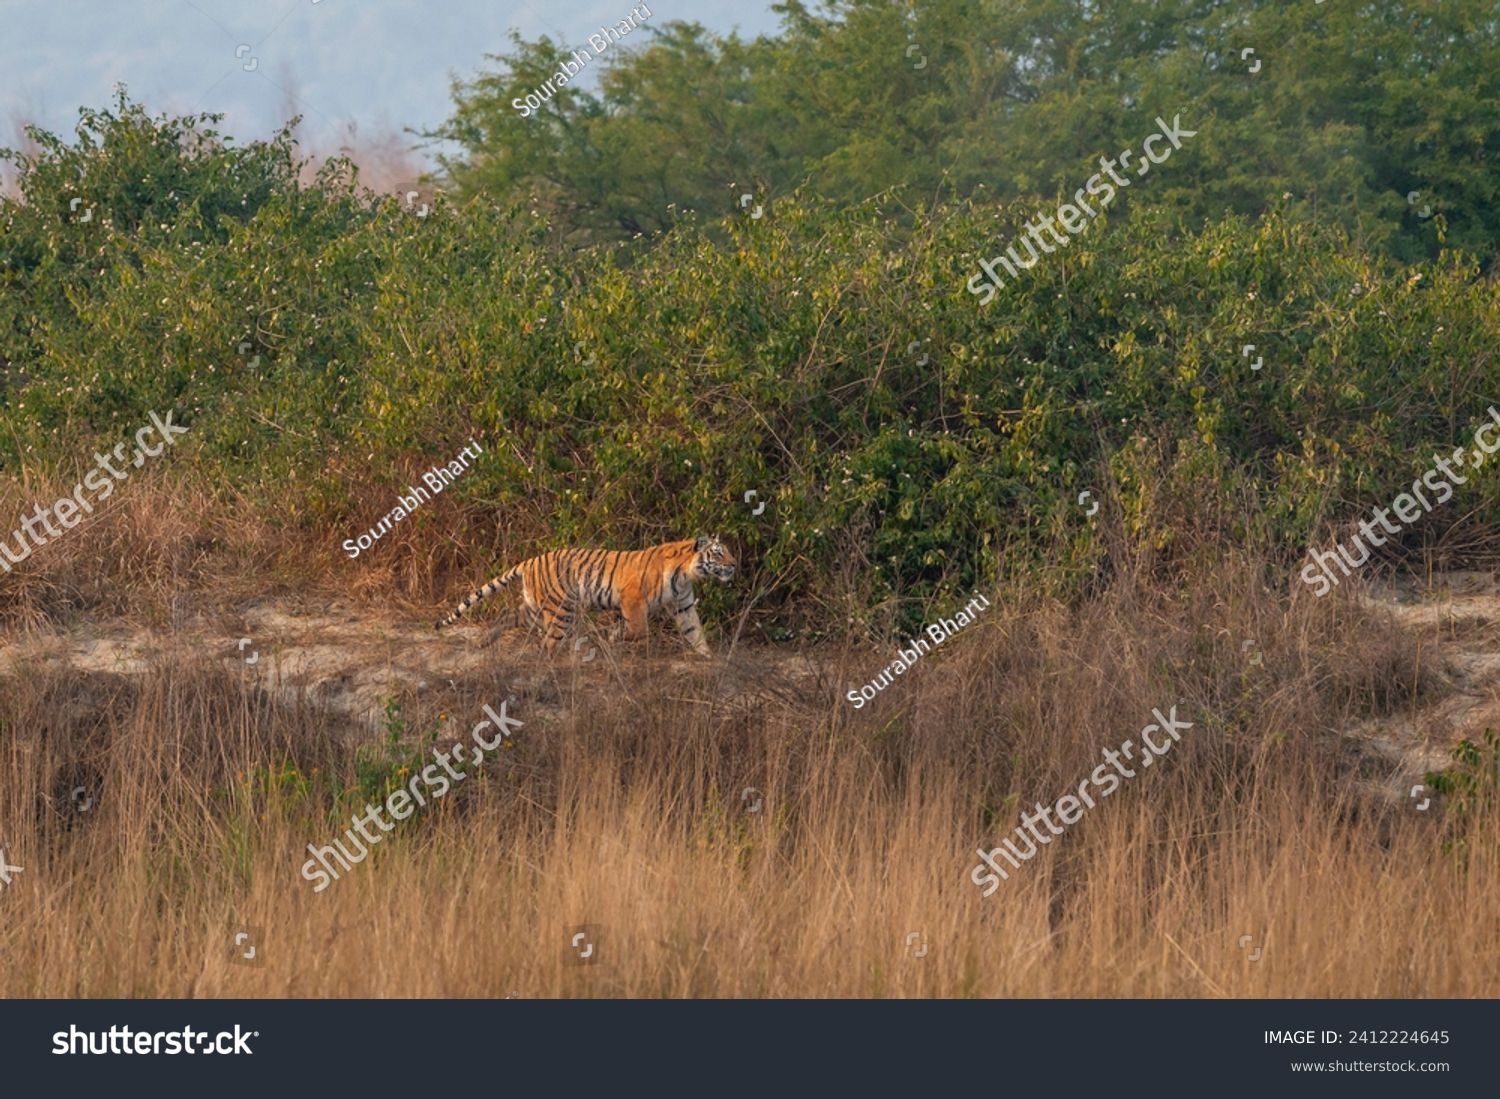 Indian wild female bengal tiger or panthera tigris running or prowl behind prey in terai region forest in winter season safari at dhikala zone of jim corbett national park reserve uttarakhand india #2412224645